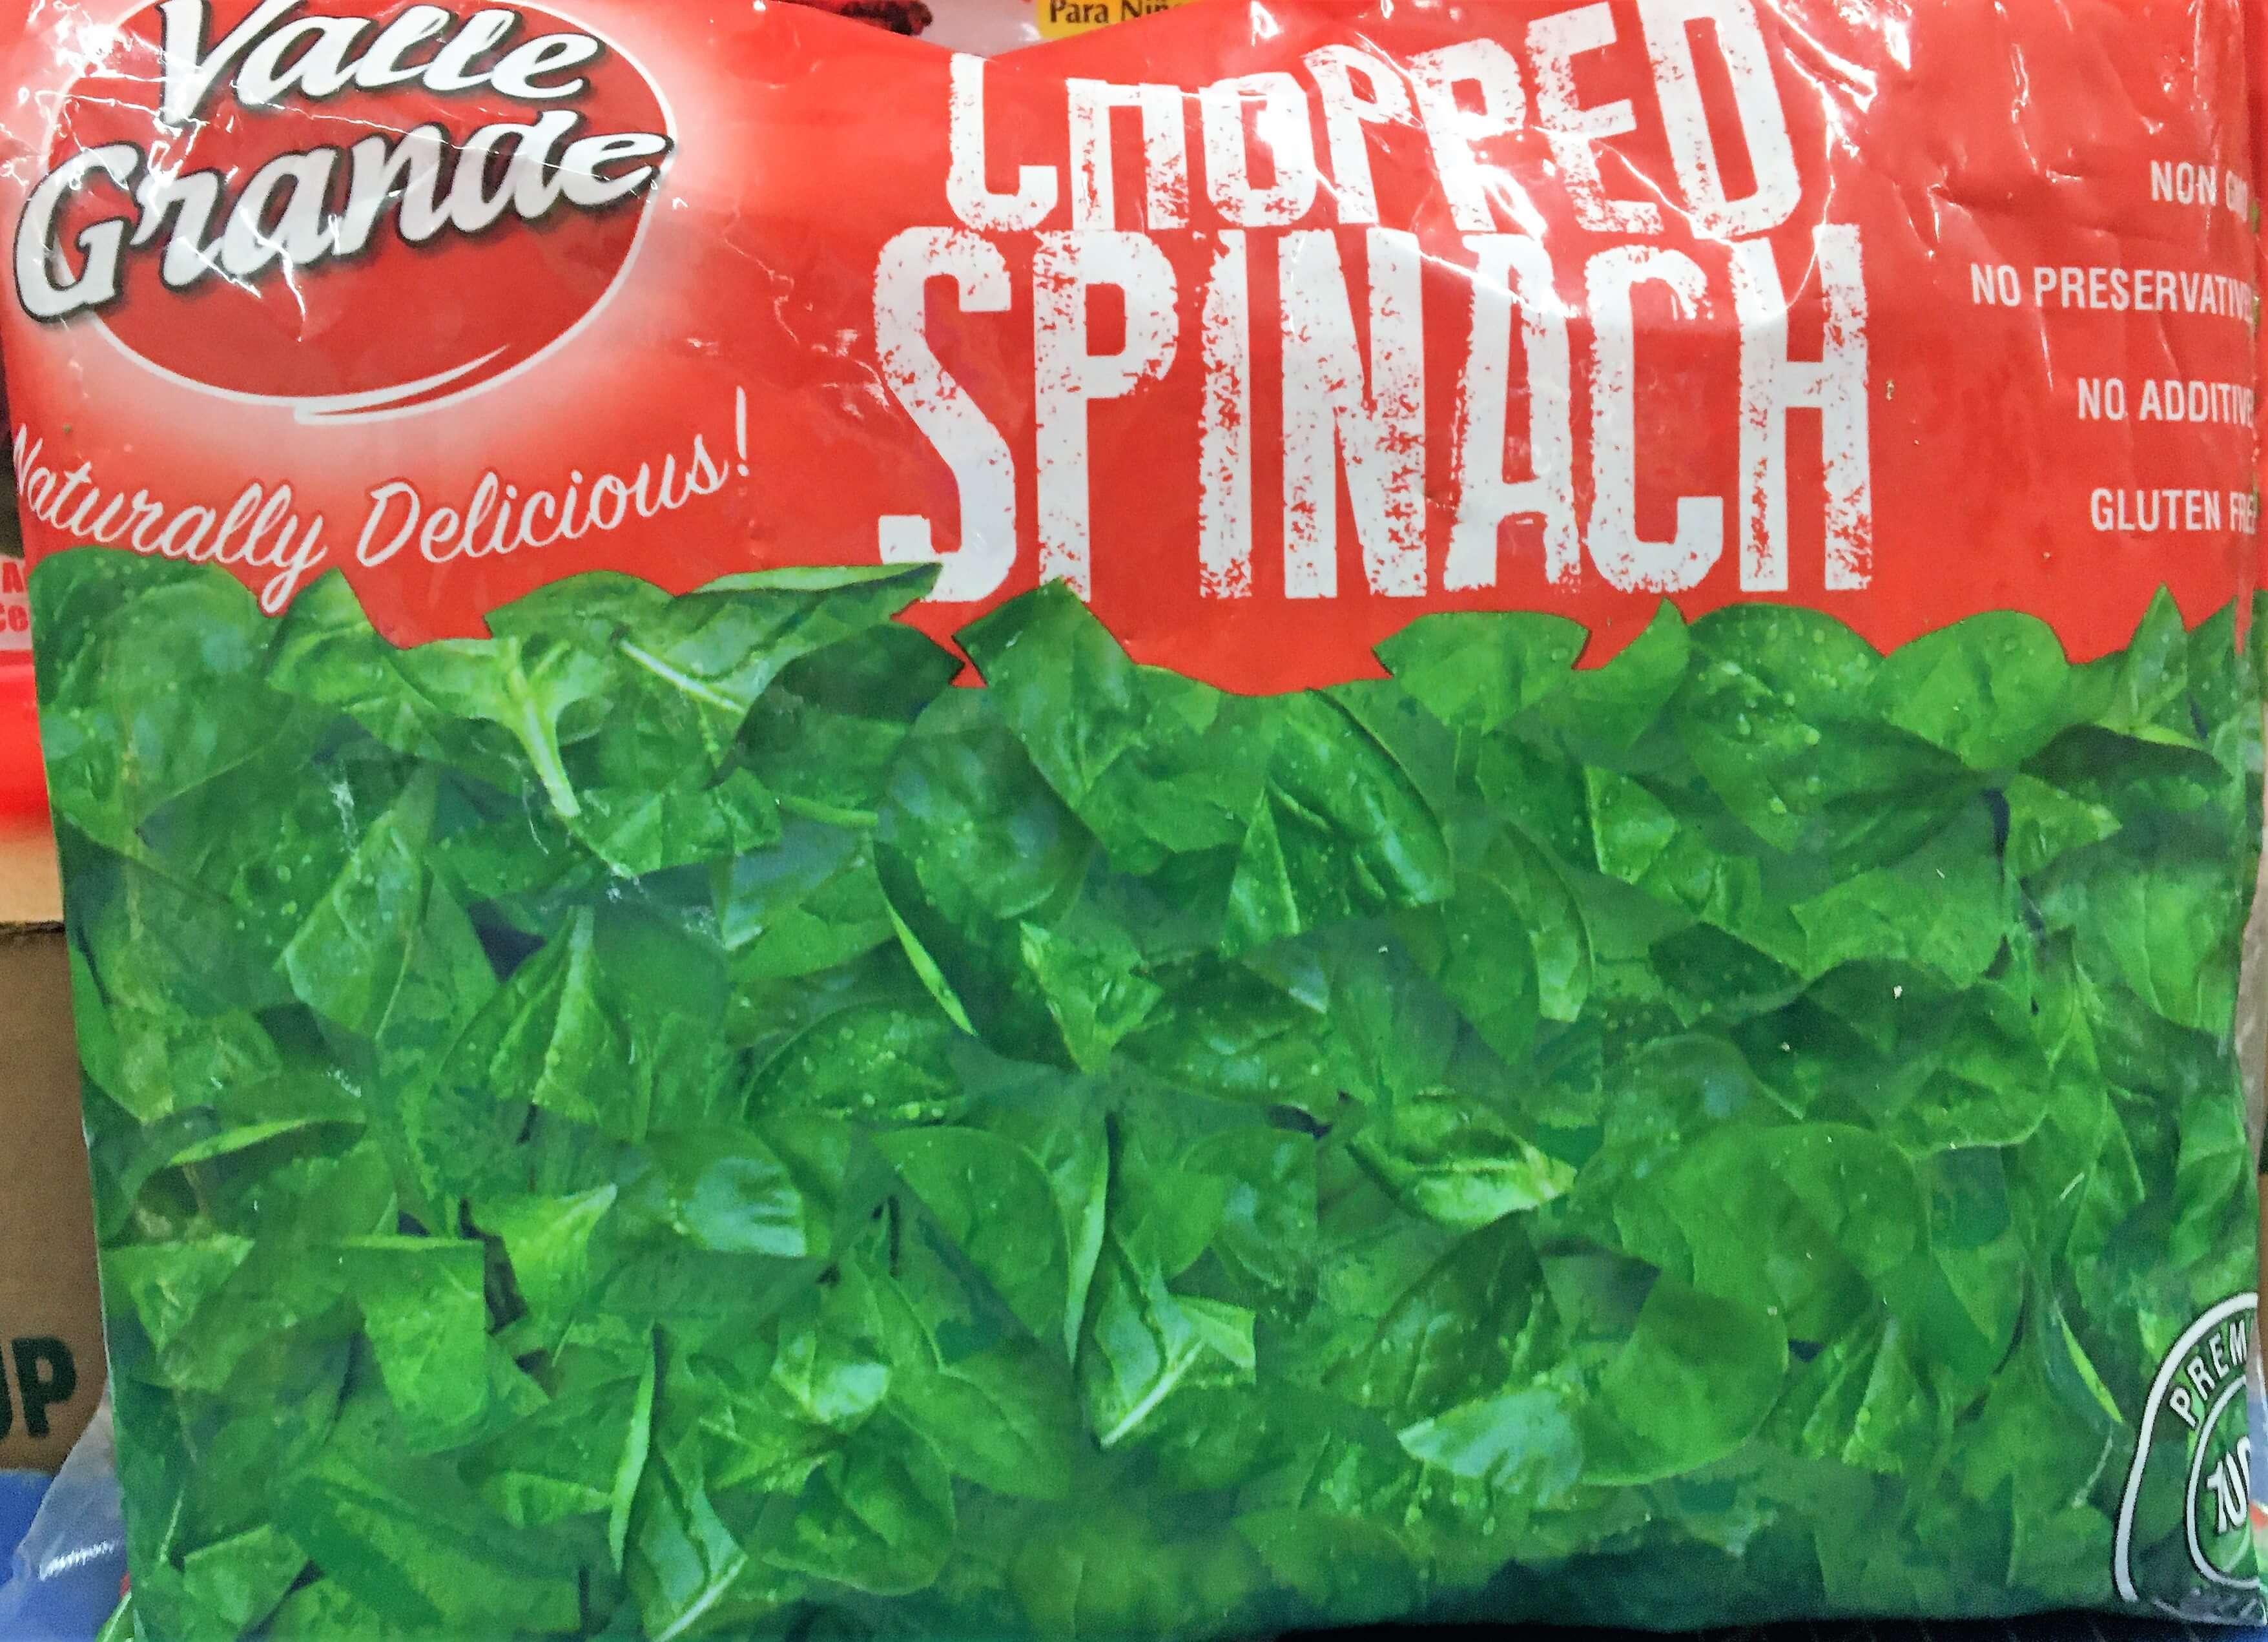 Valle Grande - Frozen Chopped Spinach 16oz.